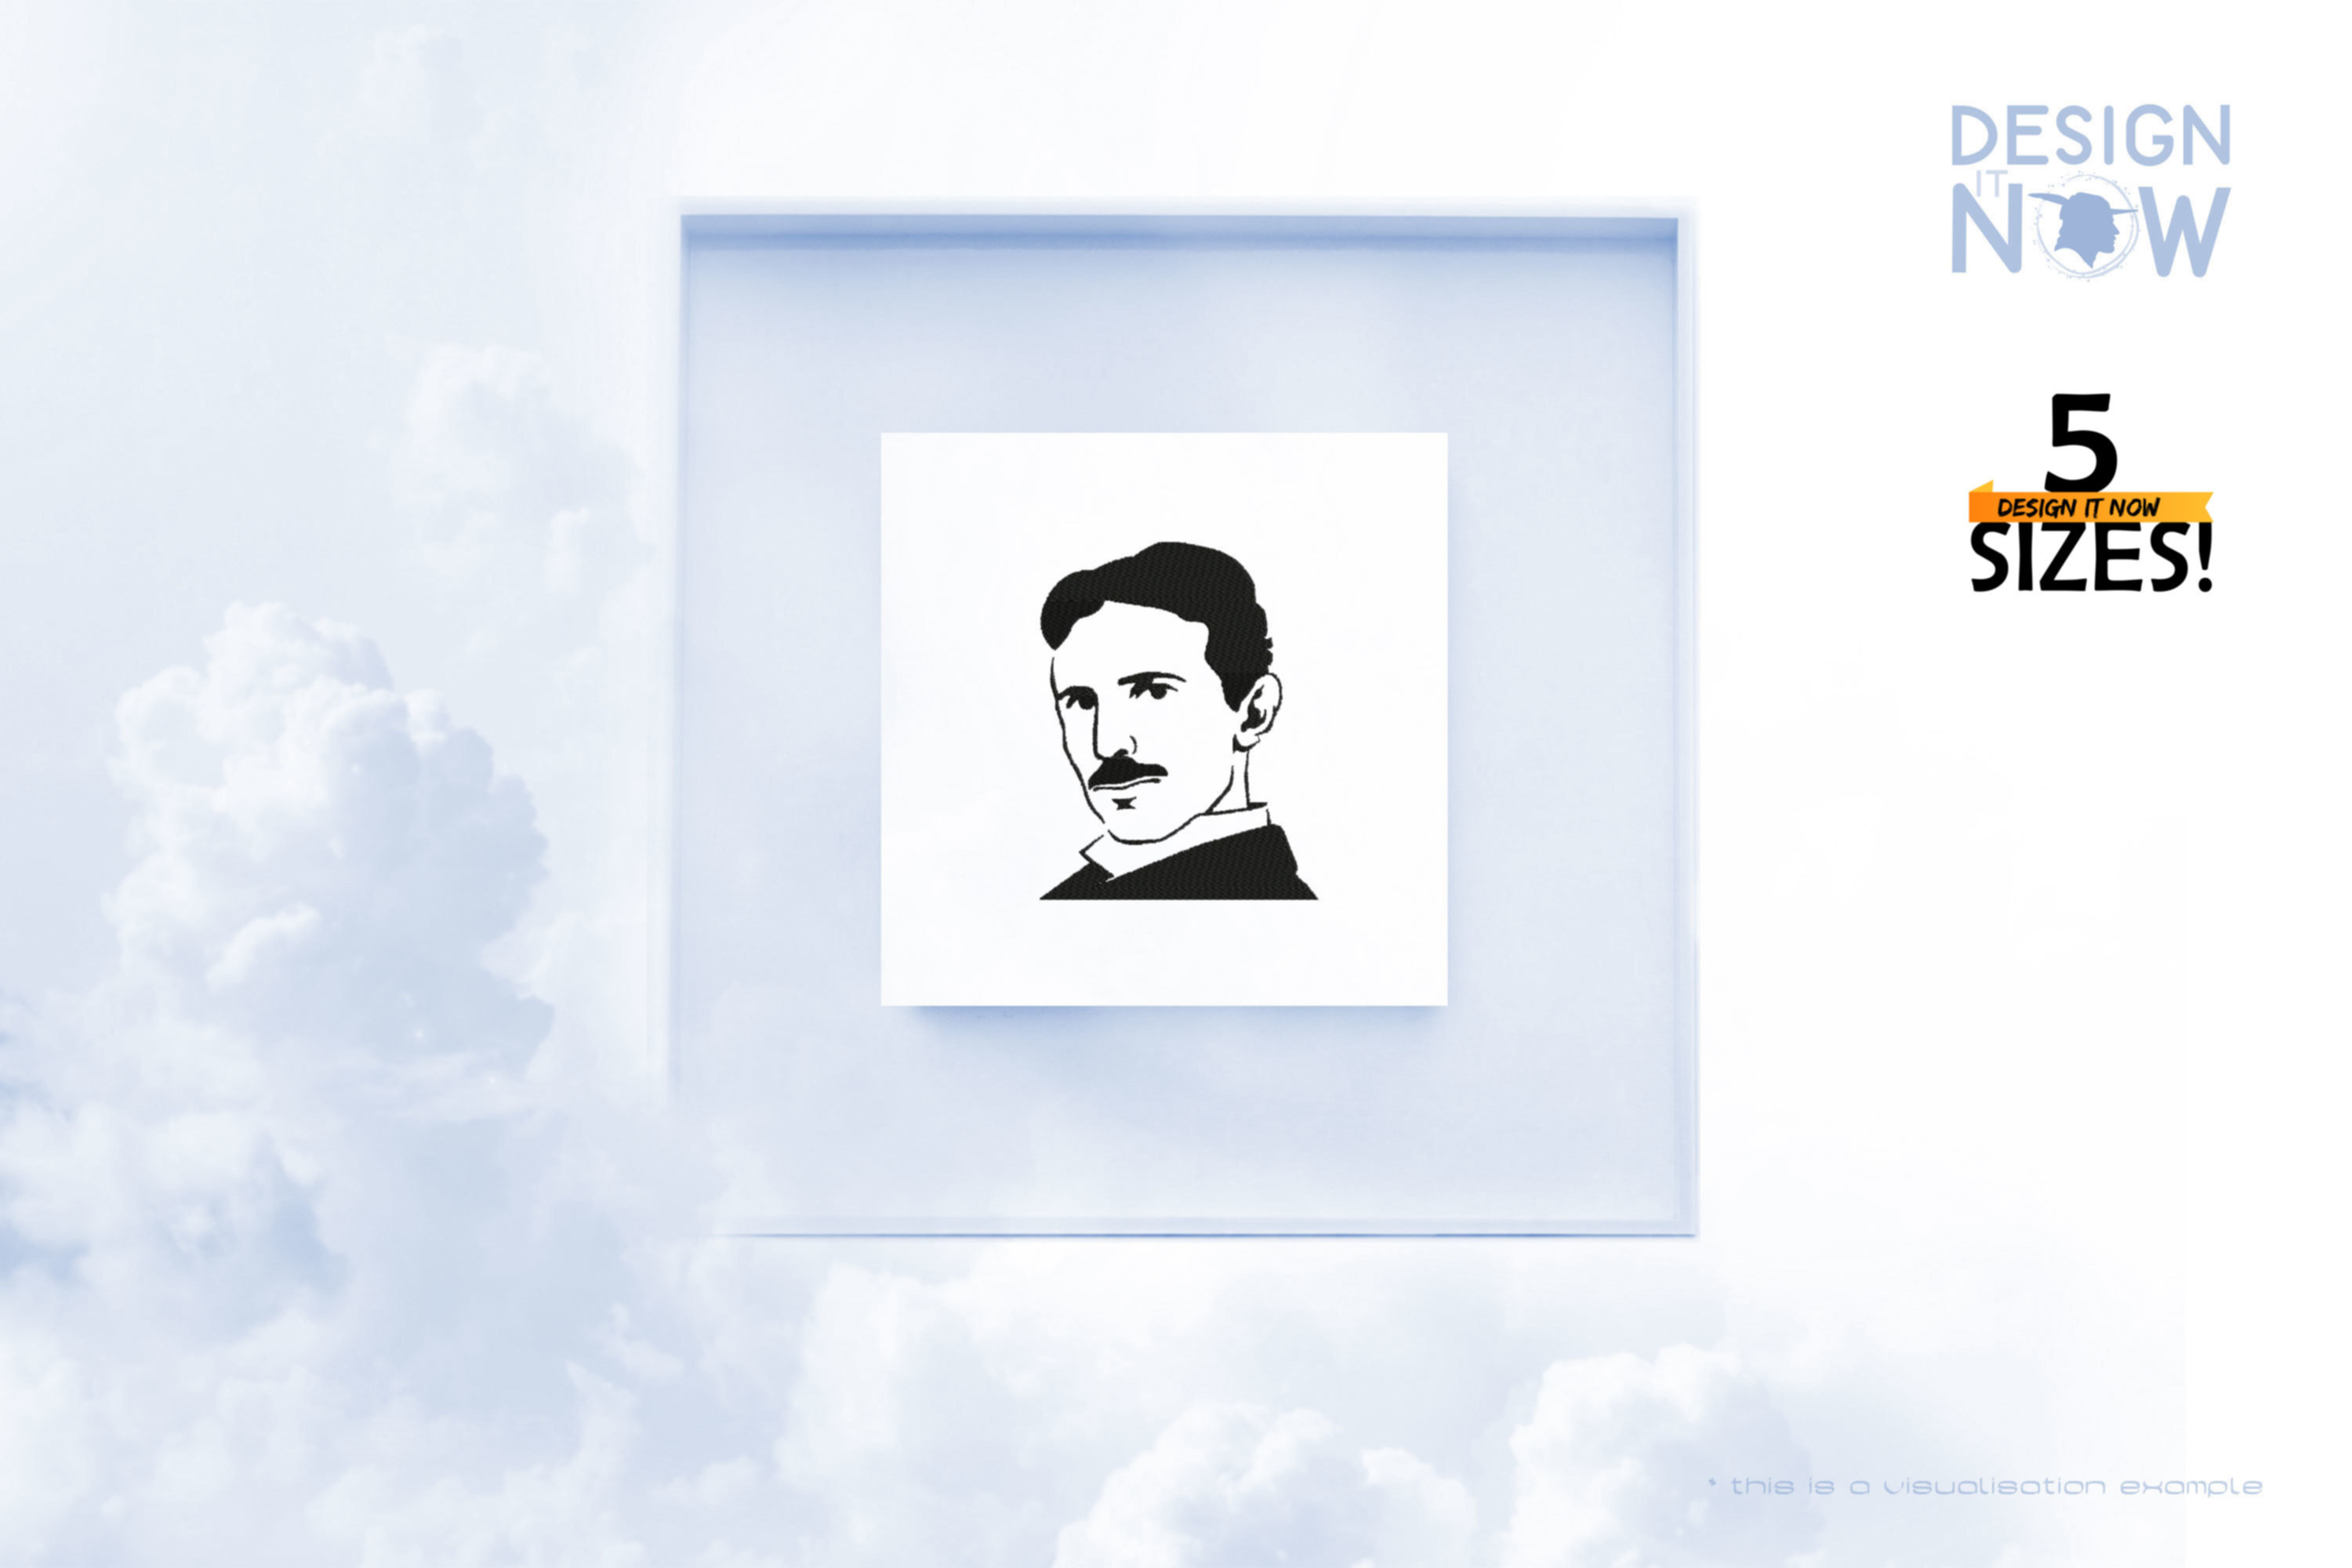 Tribute To Inventor Scientist Nikola Tesla aka Nikola Tesla